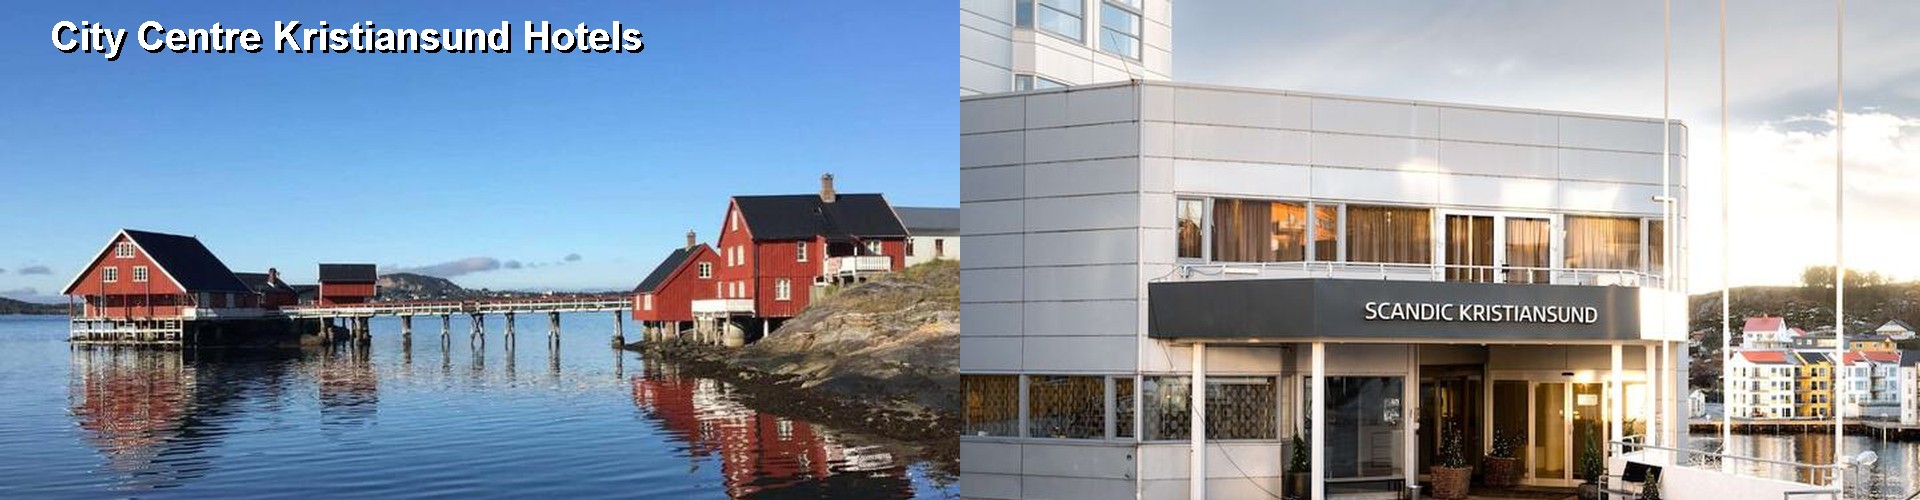 1 Best Hotels near City Centre Kristiansund